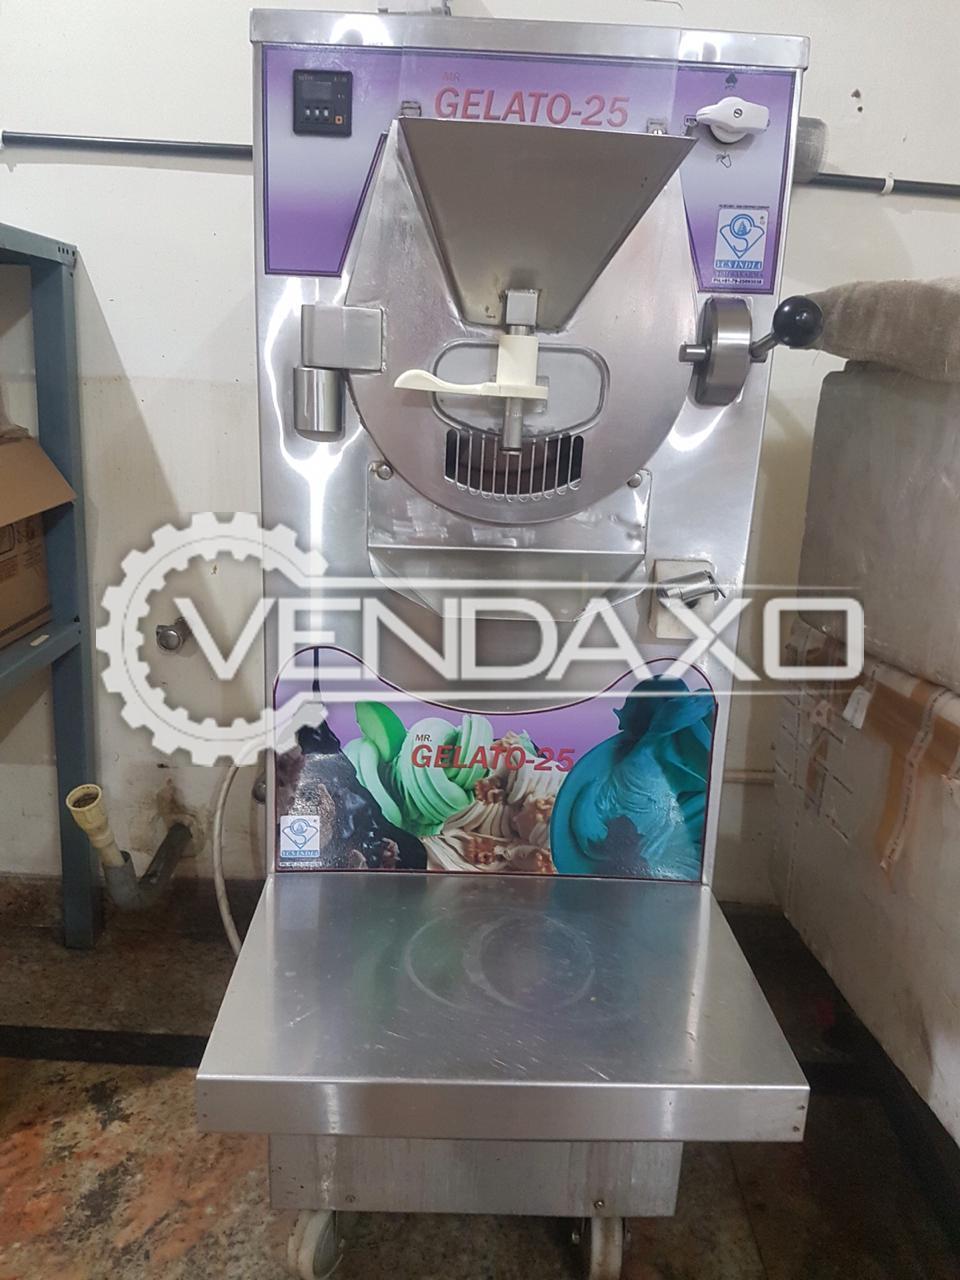 VCS India Vishwakarma Mr. Gelato-25 Ice Cream Manufacturing Batch Freezer - 25 Liter Per Hour